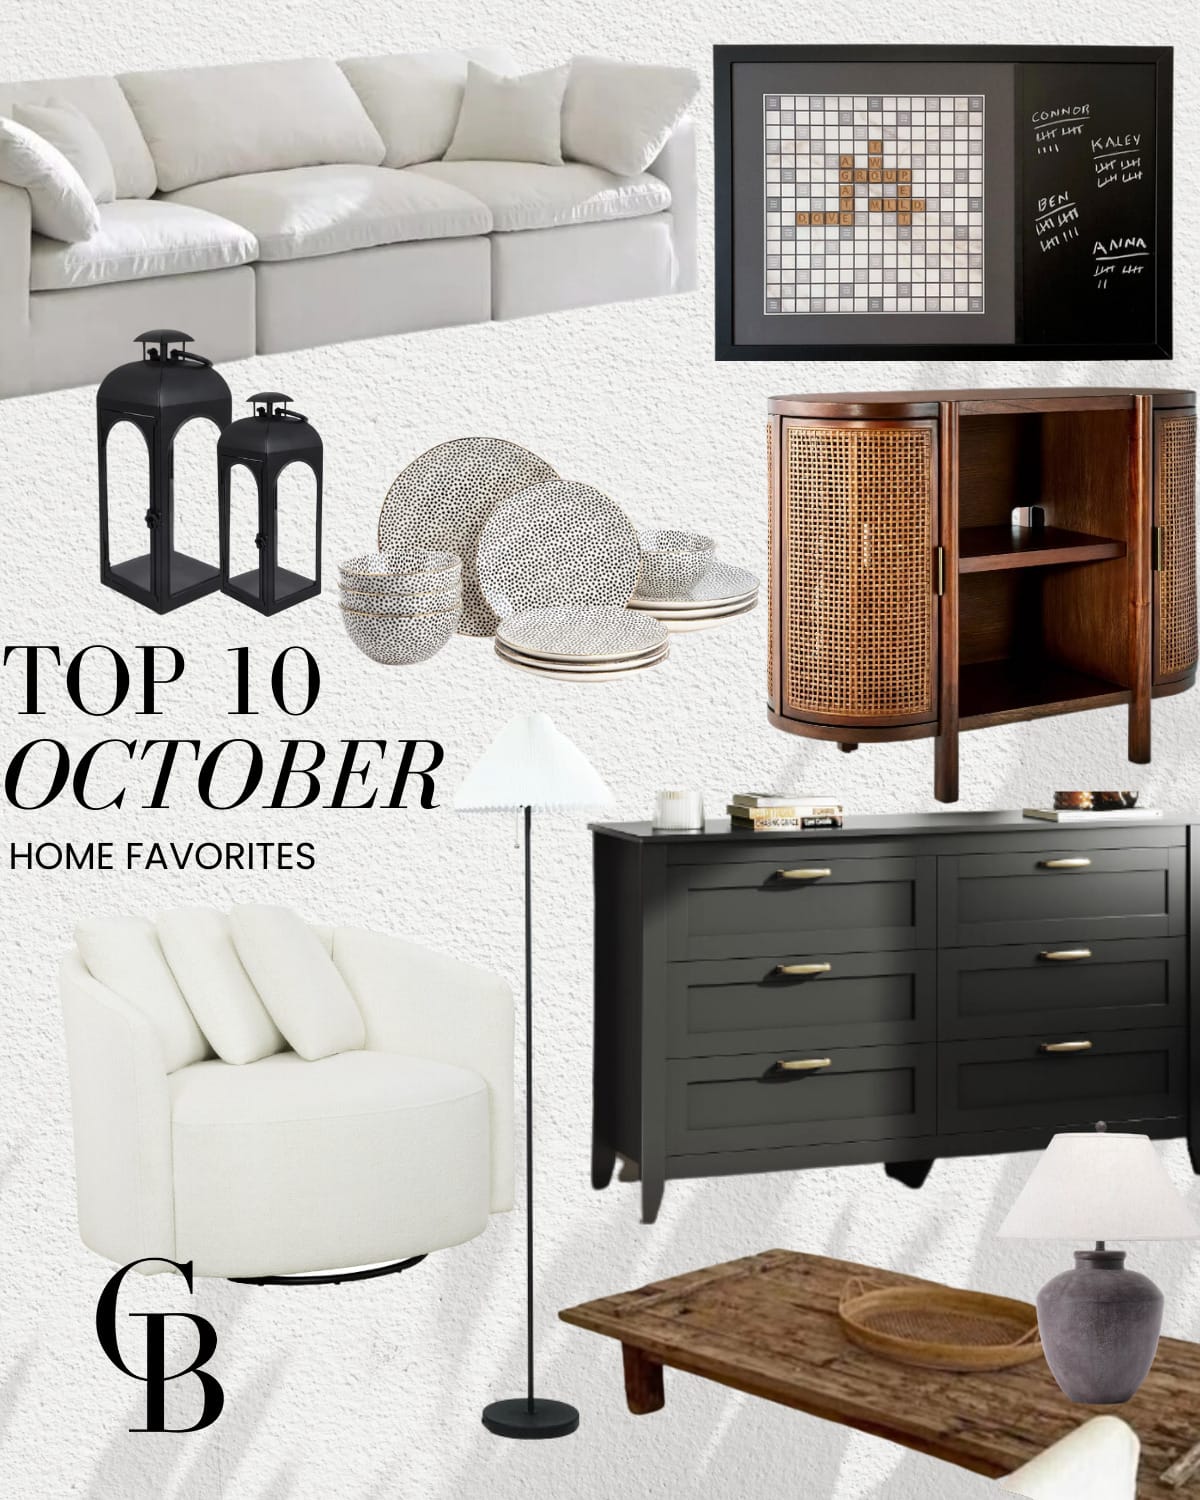 october top 10 home favorites | #october #topseller #home #favorites #homedecor #furniture #lighting #accentchair #table #dresser #console #scrabble